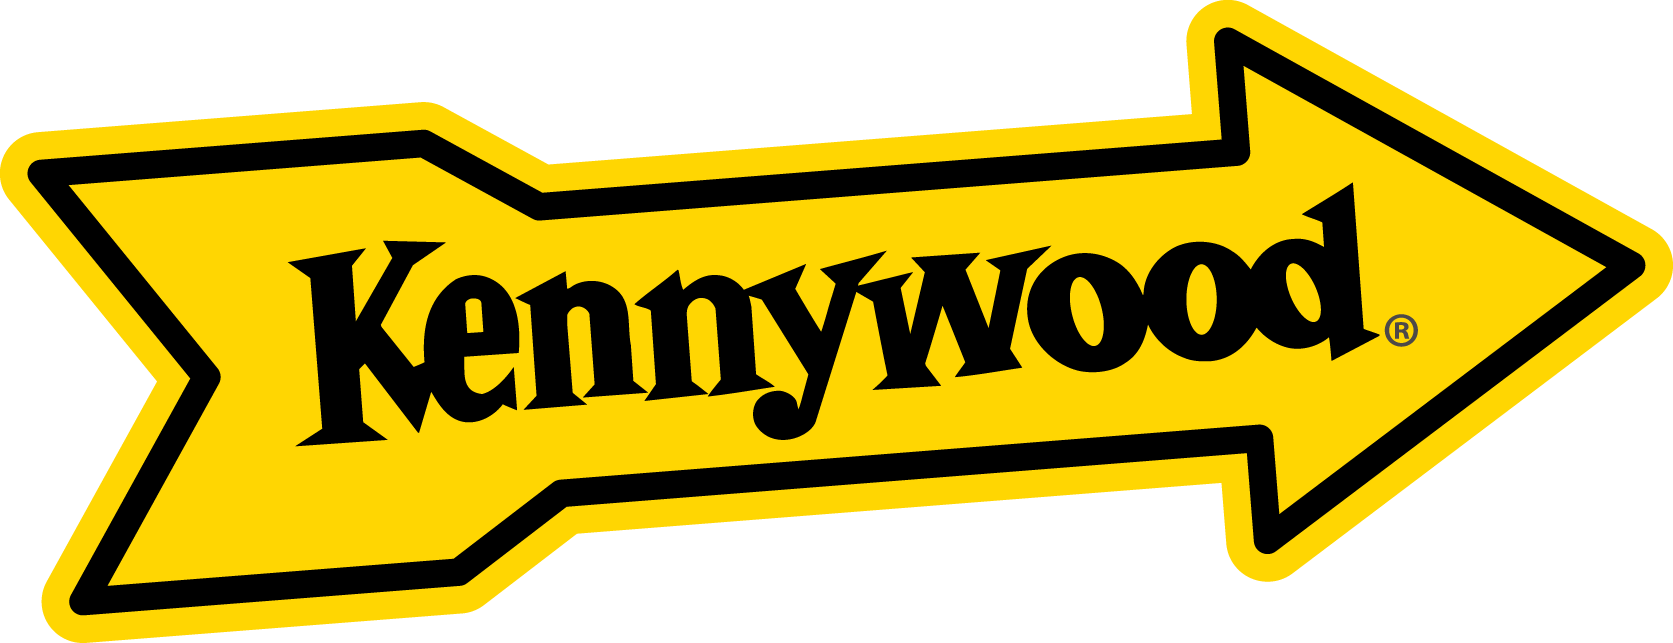 Kennywood Amusement Park, Located Near Pittsburgh, - Kennywood Arrow (1673x643)